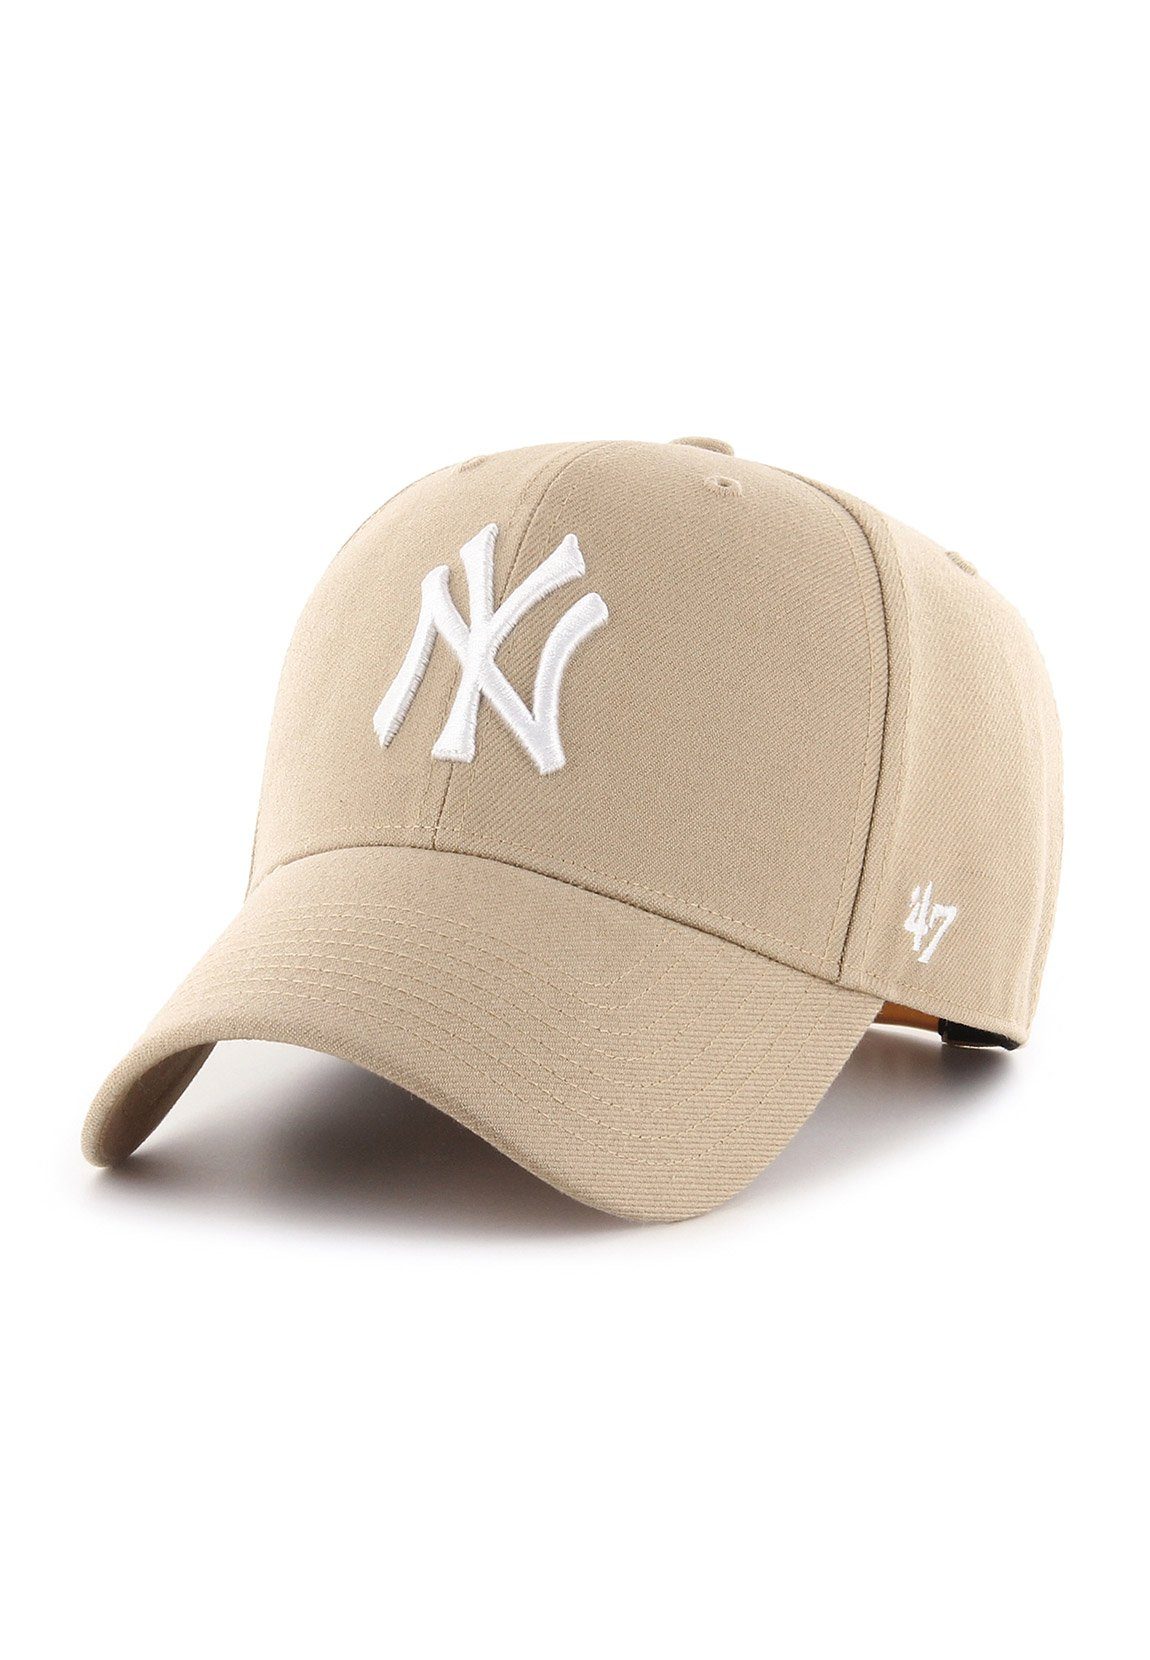 x27;47 Brand Baseball Cap 47 Beige Cap B-MVPSP17WBP-KH Brand NY YANKEES Adjustable